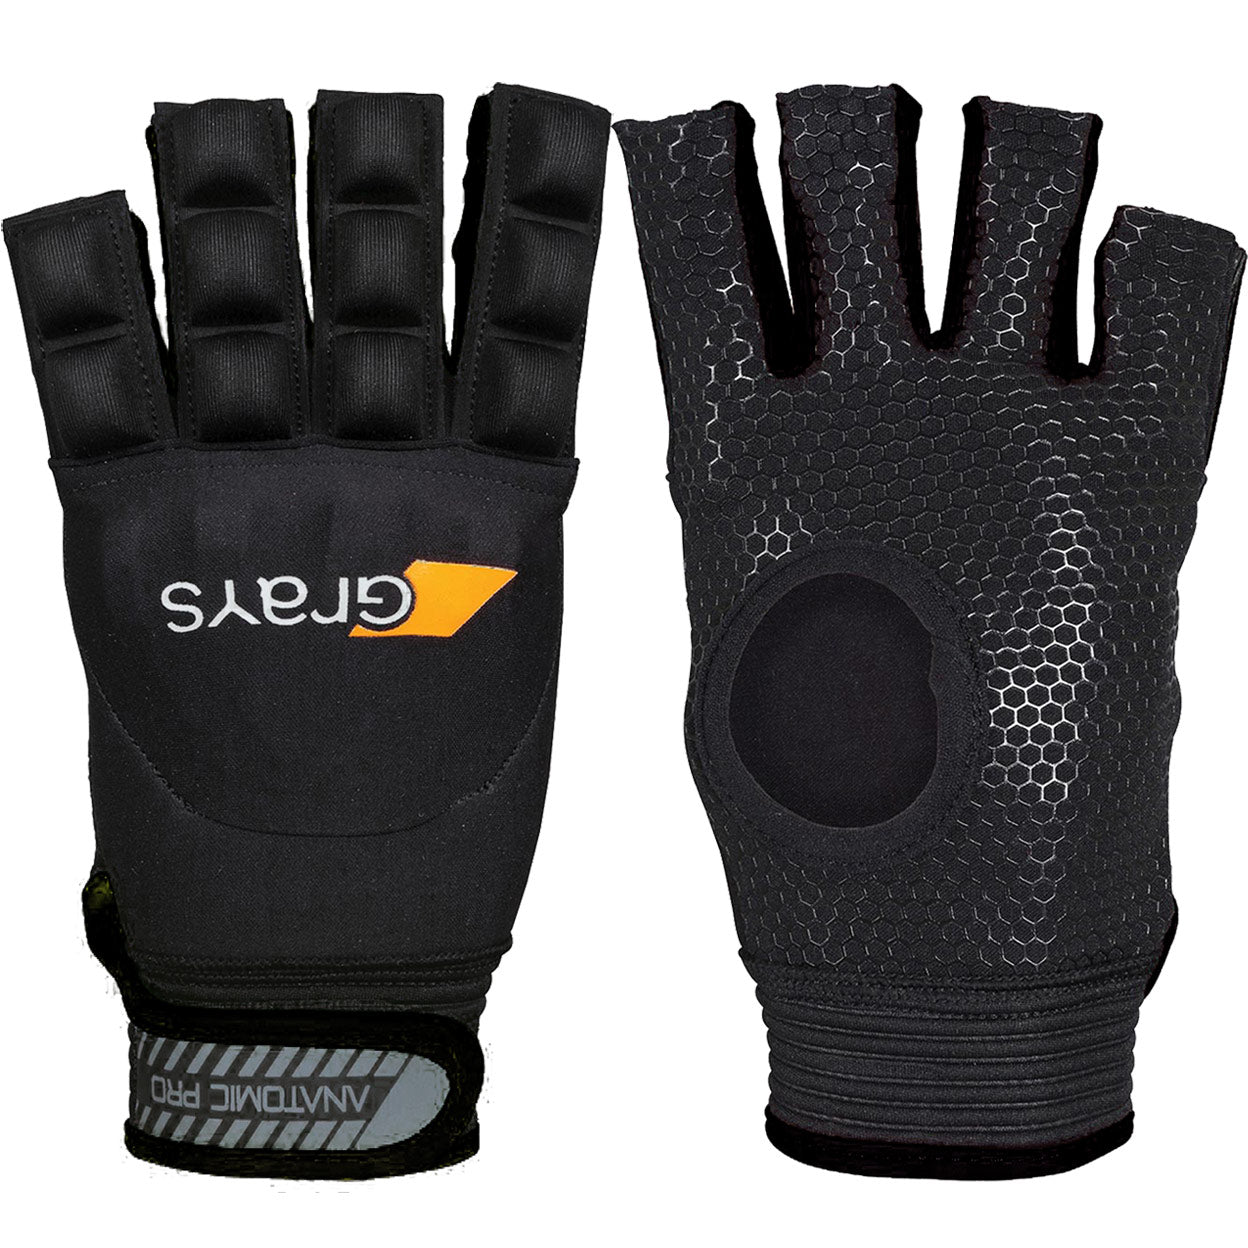 Grays Anatomic Pro Half Finger Players Glove Equipment Longstreth Black XSmall Left Hand